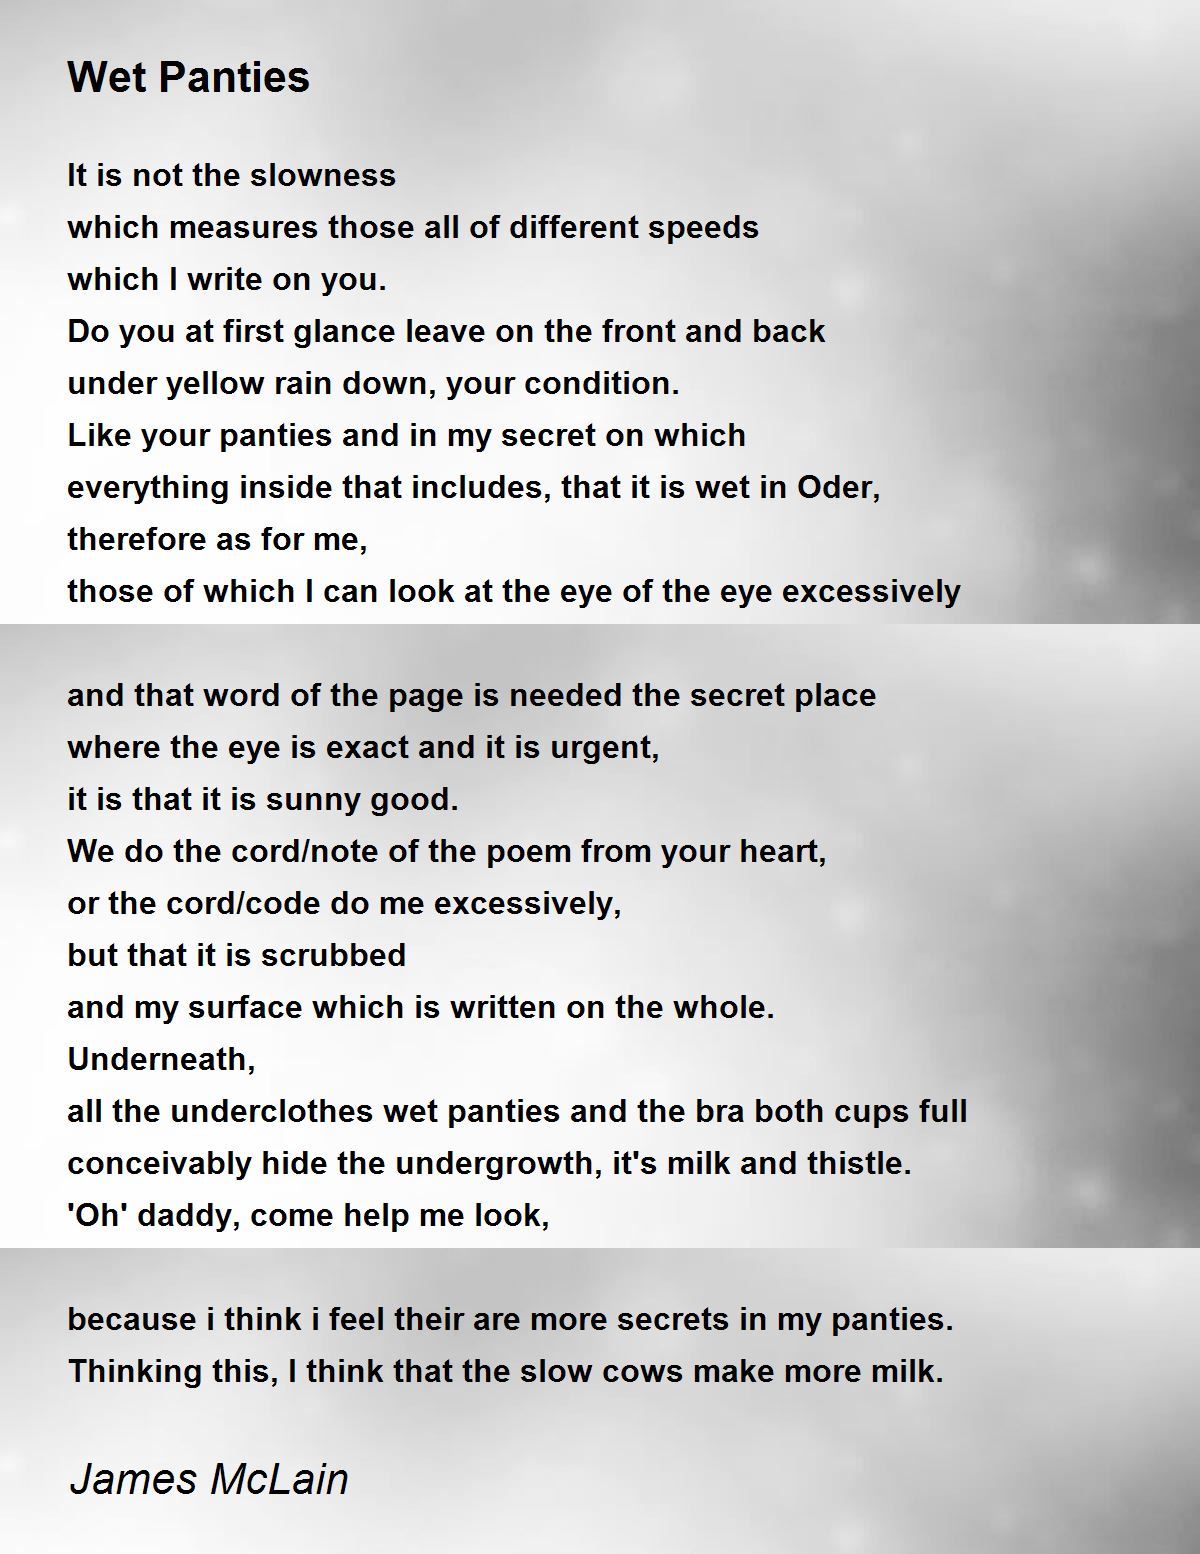 Wet Panties poem is from James McLain poems. 